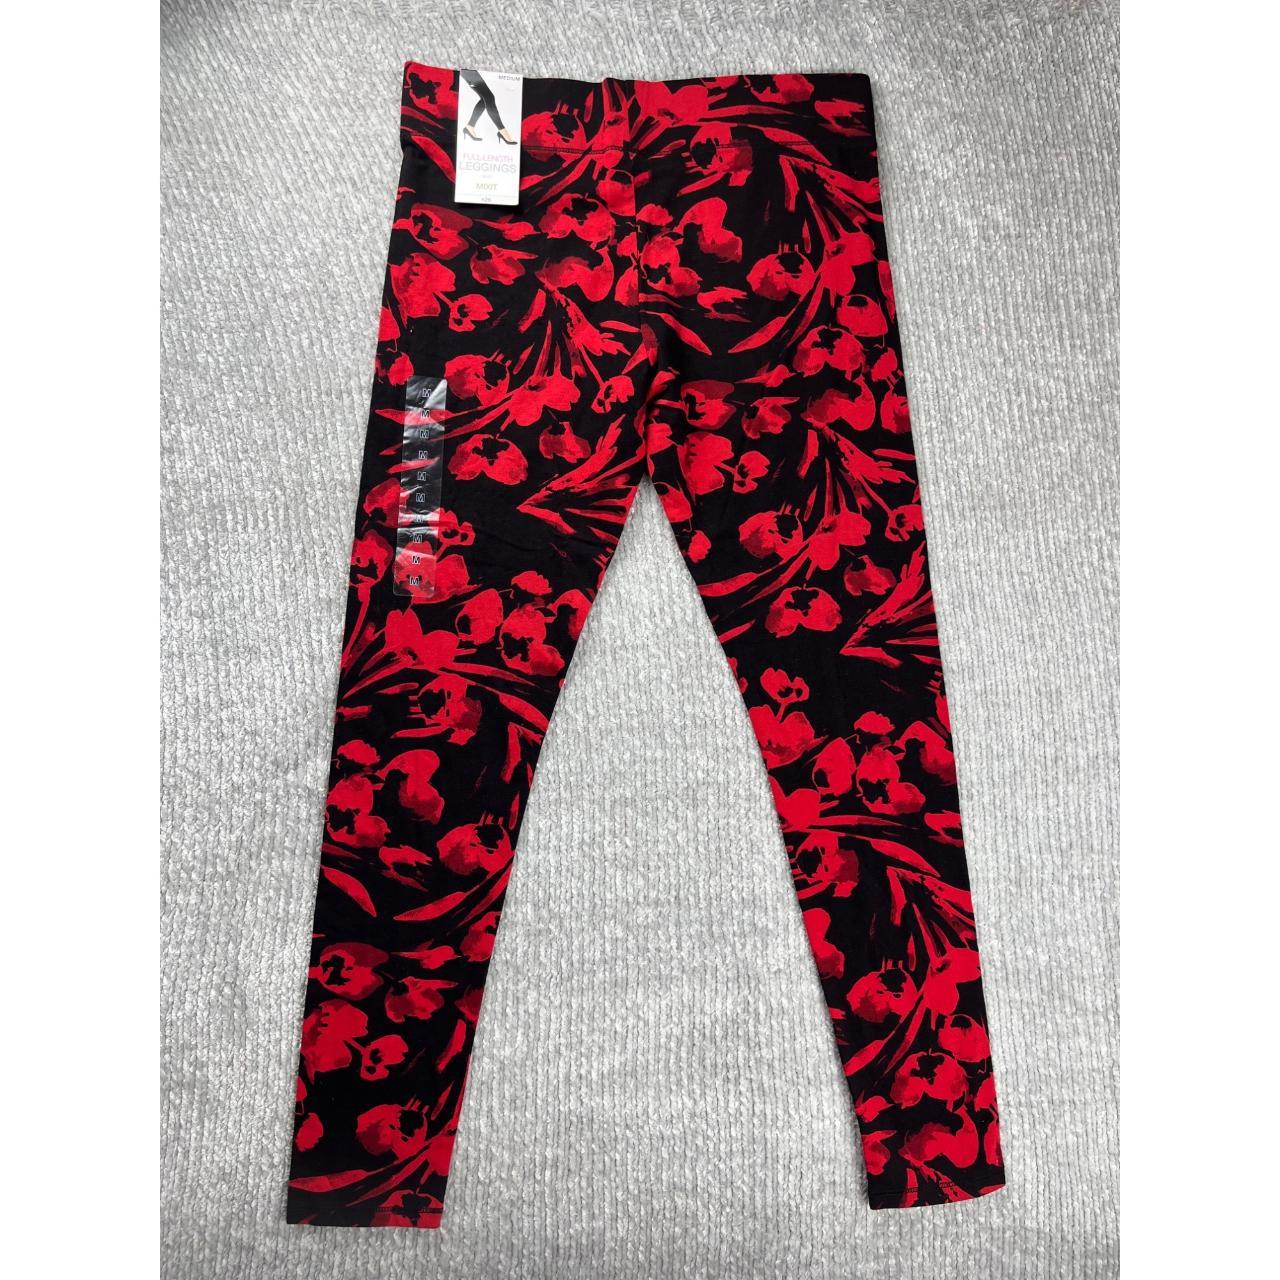 Mixit Leggings Woman Medium Red Floral Full Length - Depop